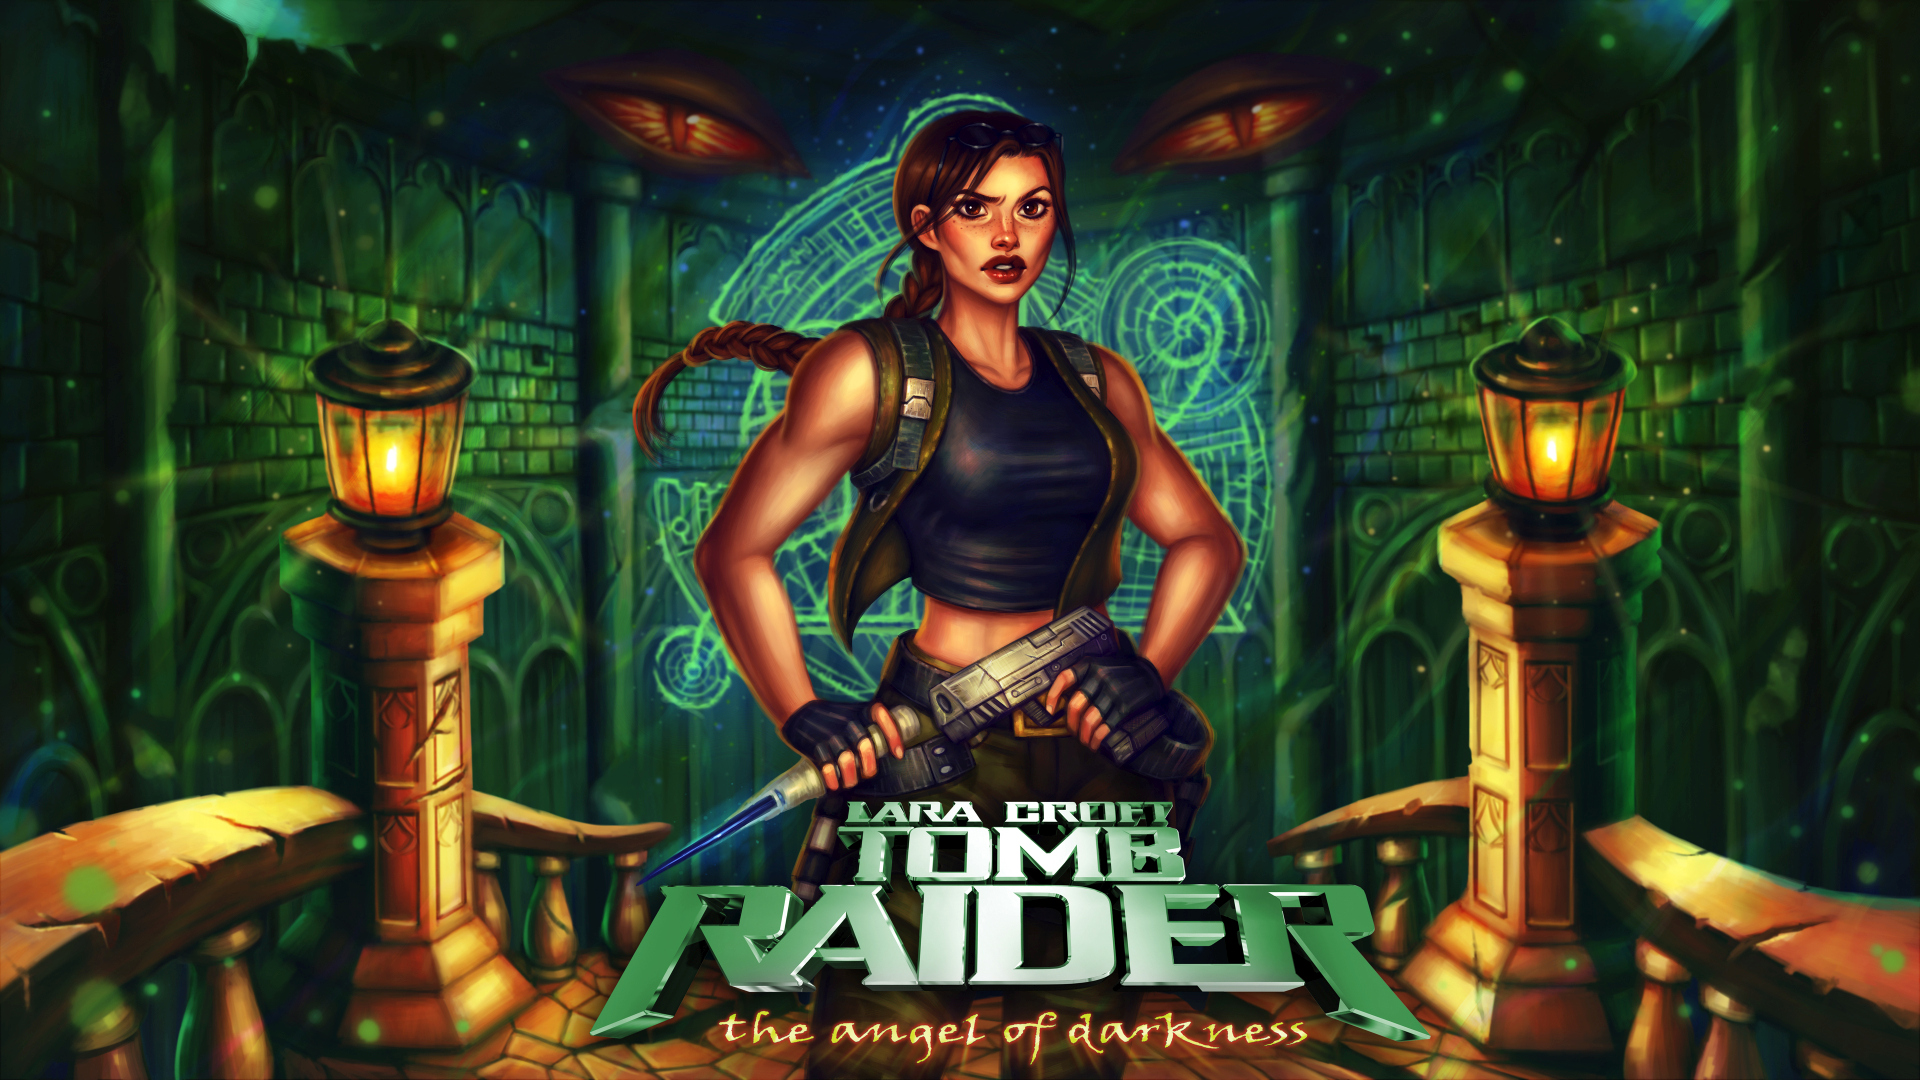 Reimagined Tomb Raider: The Angel of Darkness box art by Anastasia Ershova